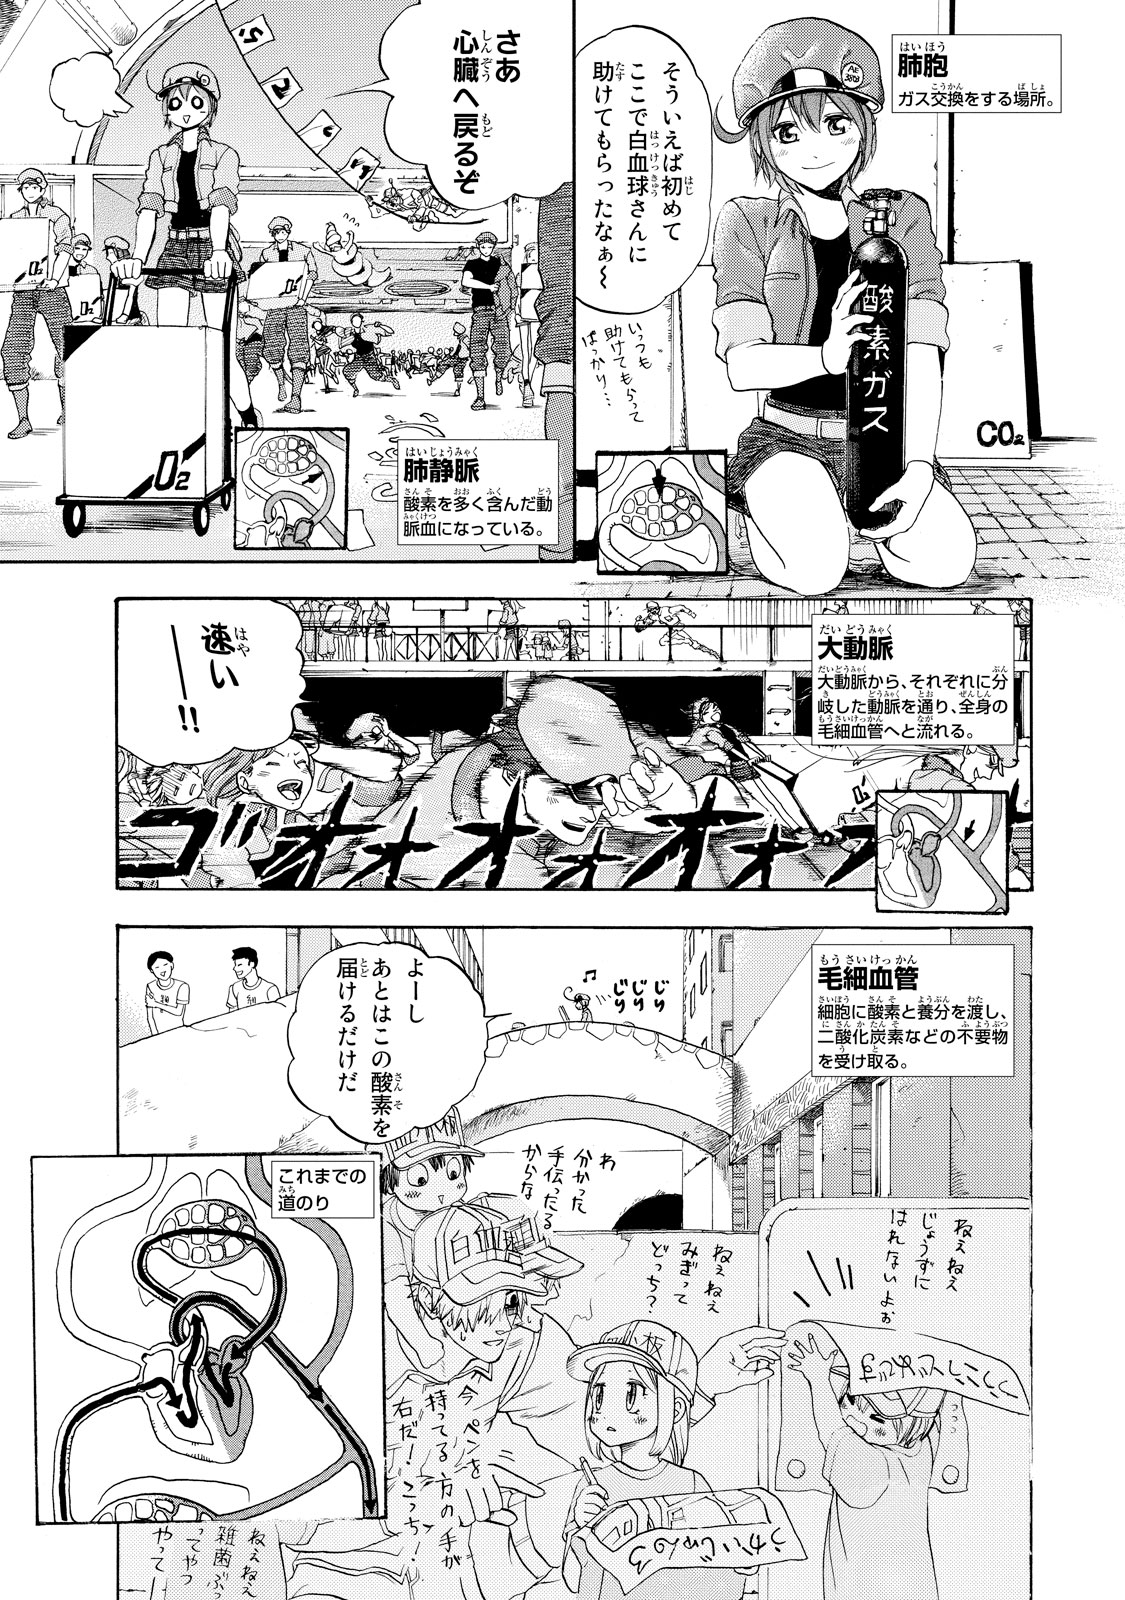 Hataraku Saibou - Chapter 10 - Page 17